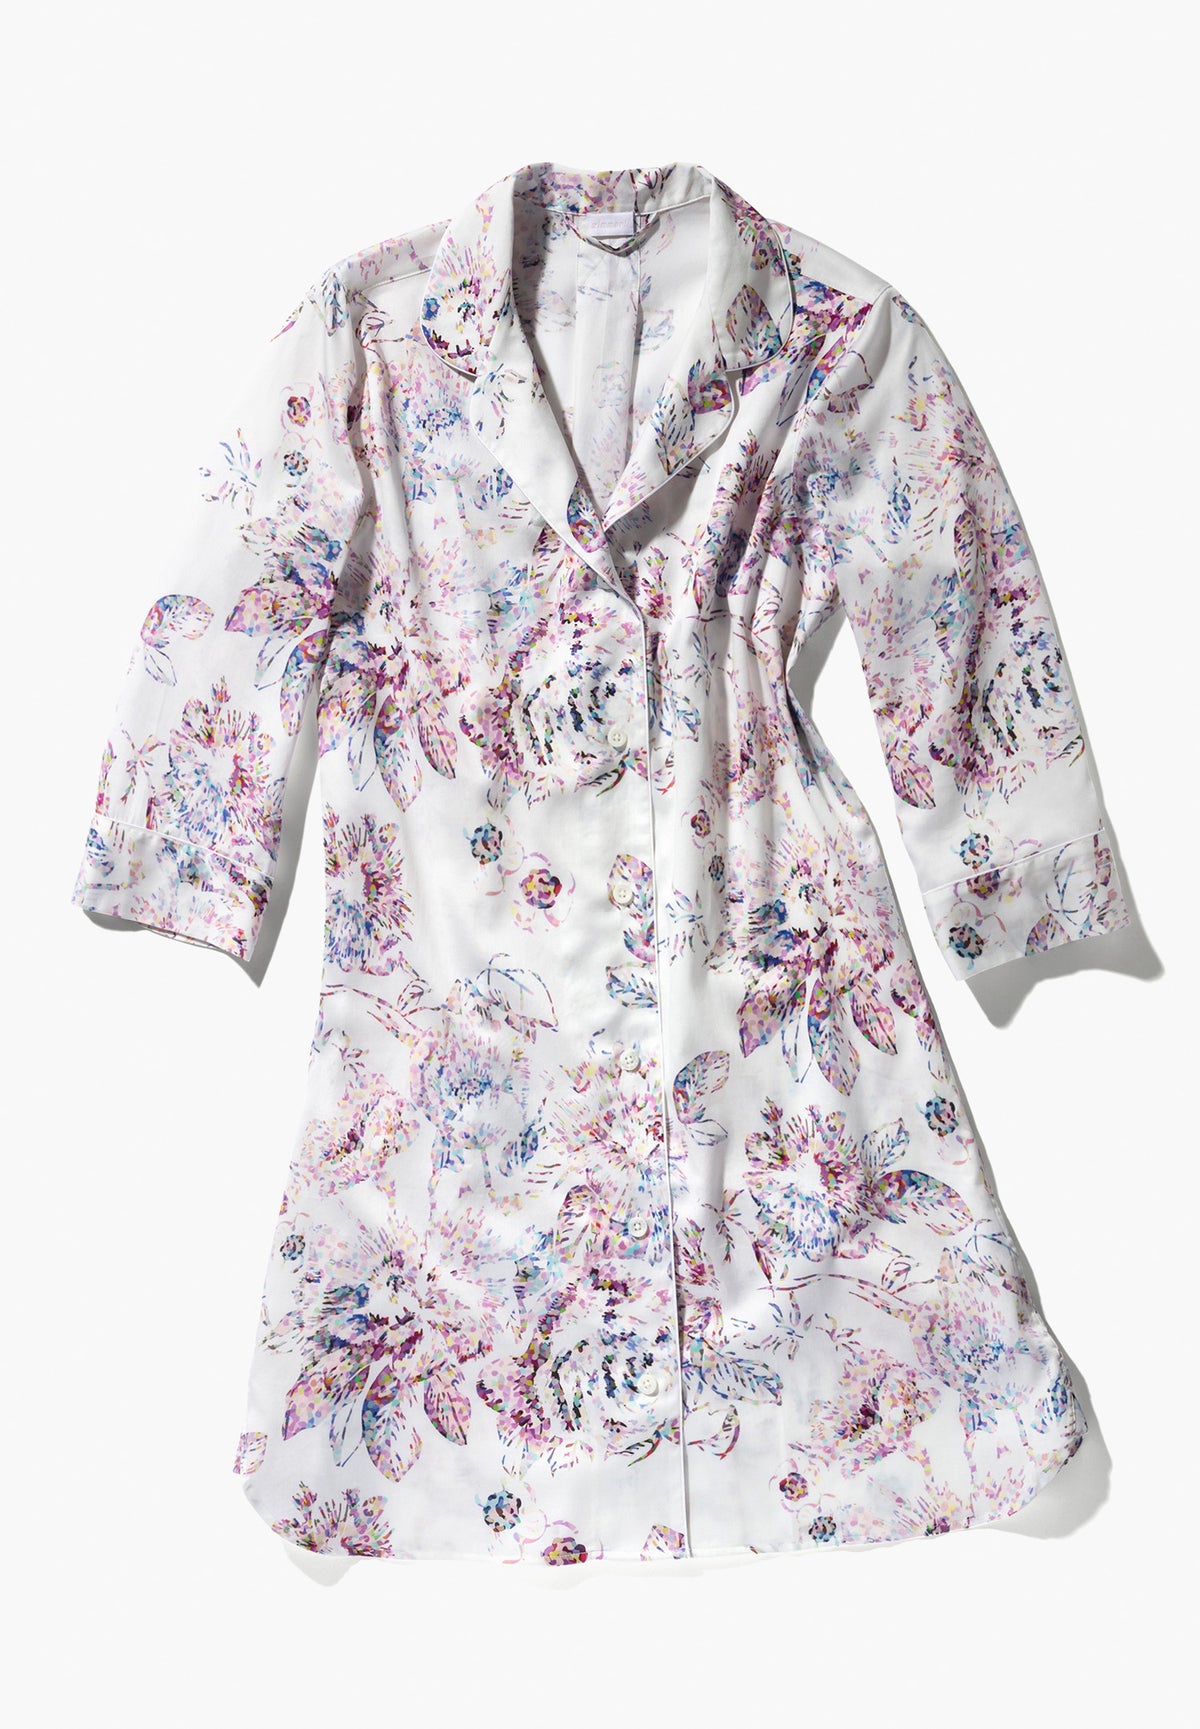 Cotton Sateen Print | Sleepshirt 3/4 Sleeve - pixel flowers